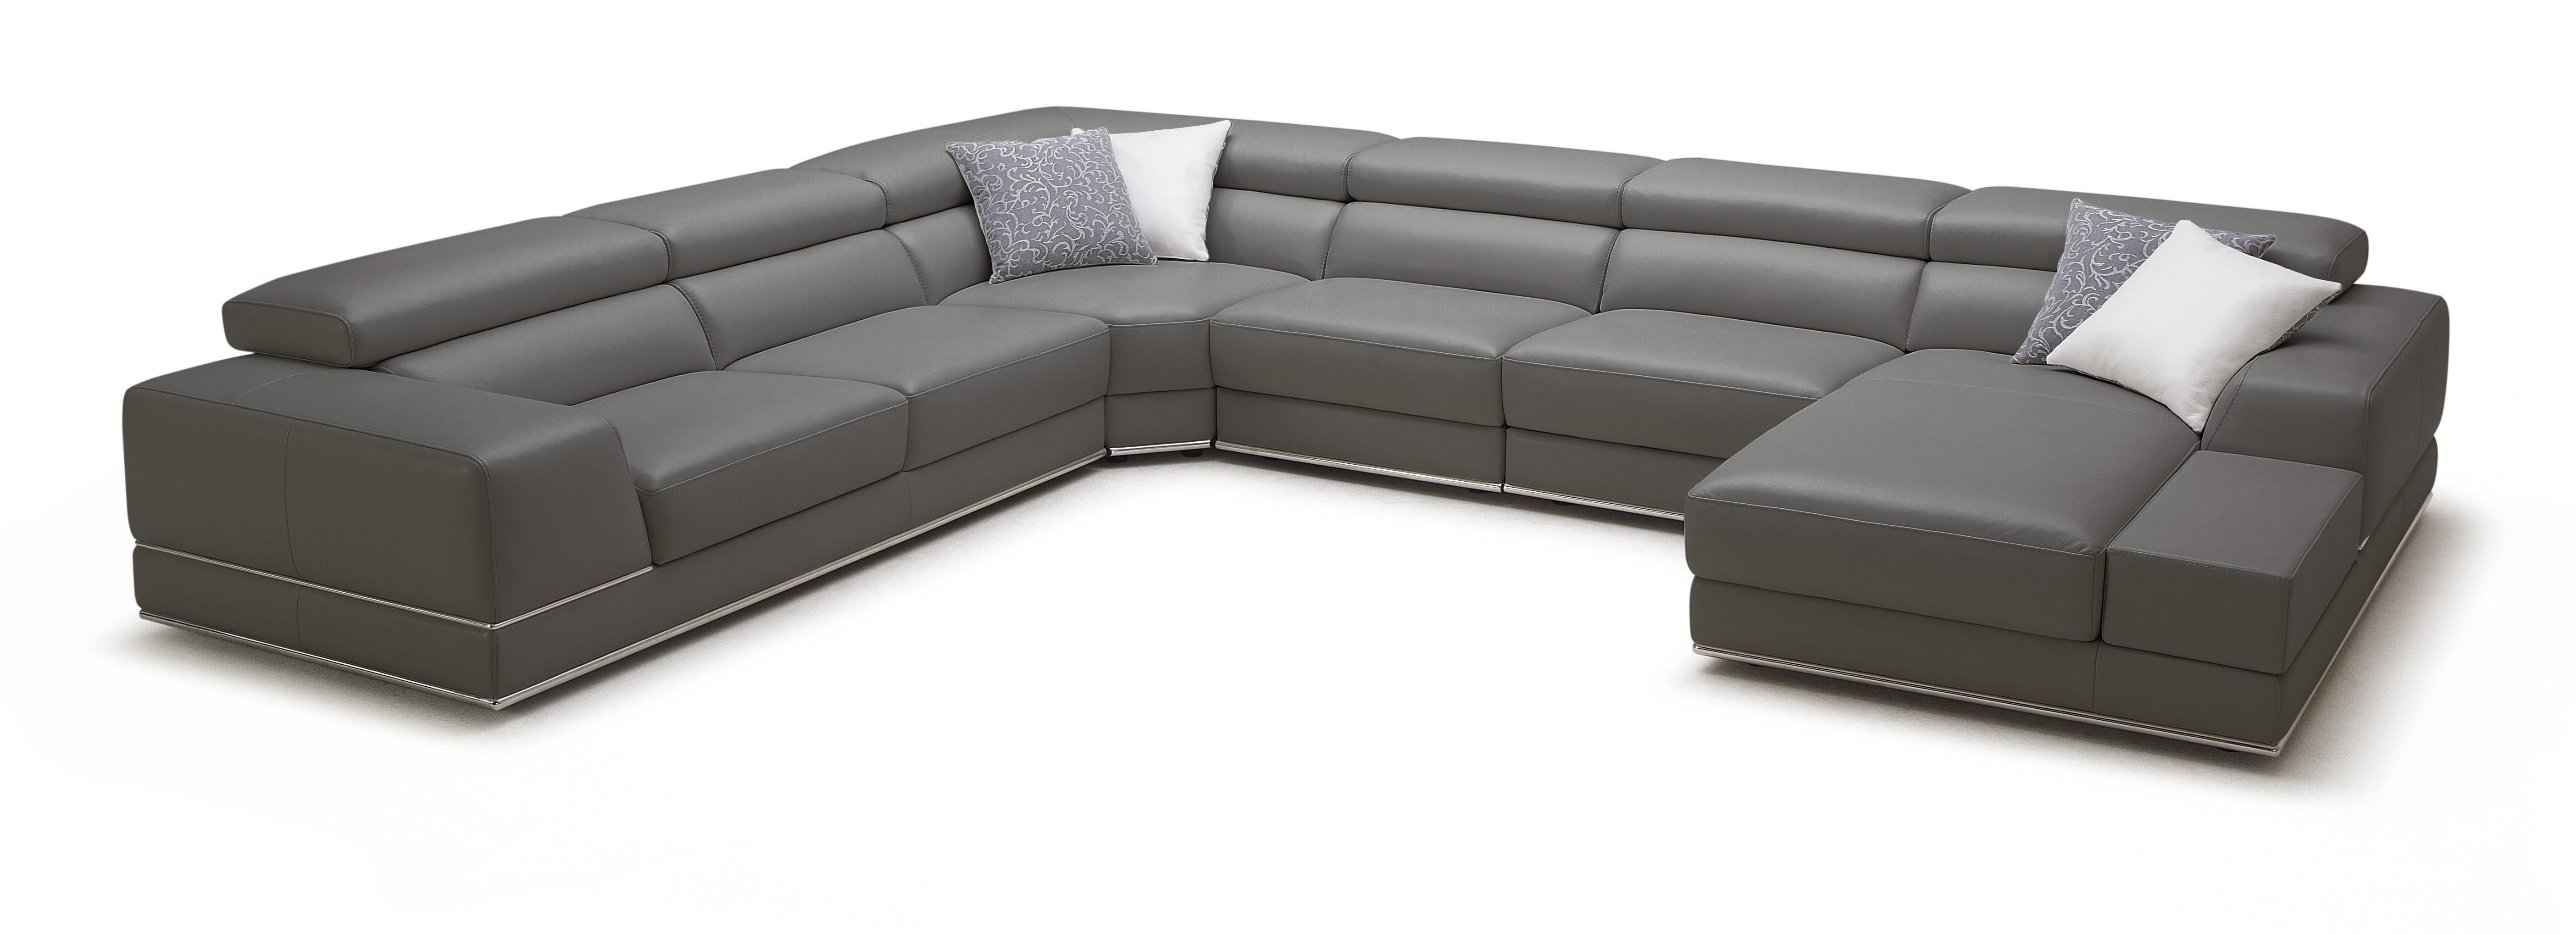 bergamo sectional leather sofa